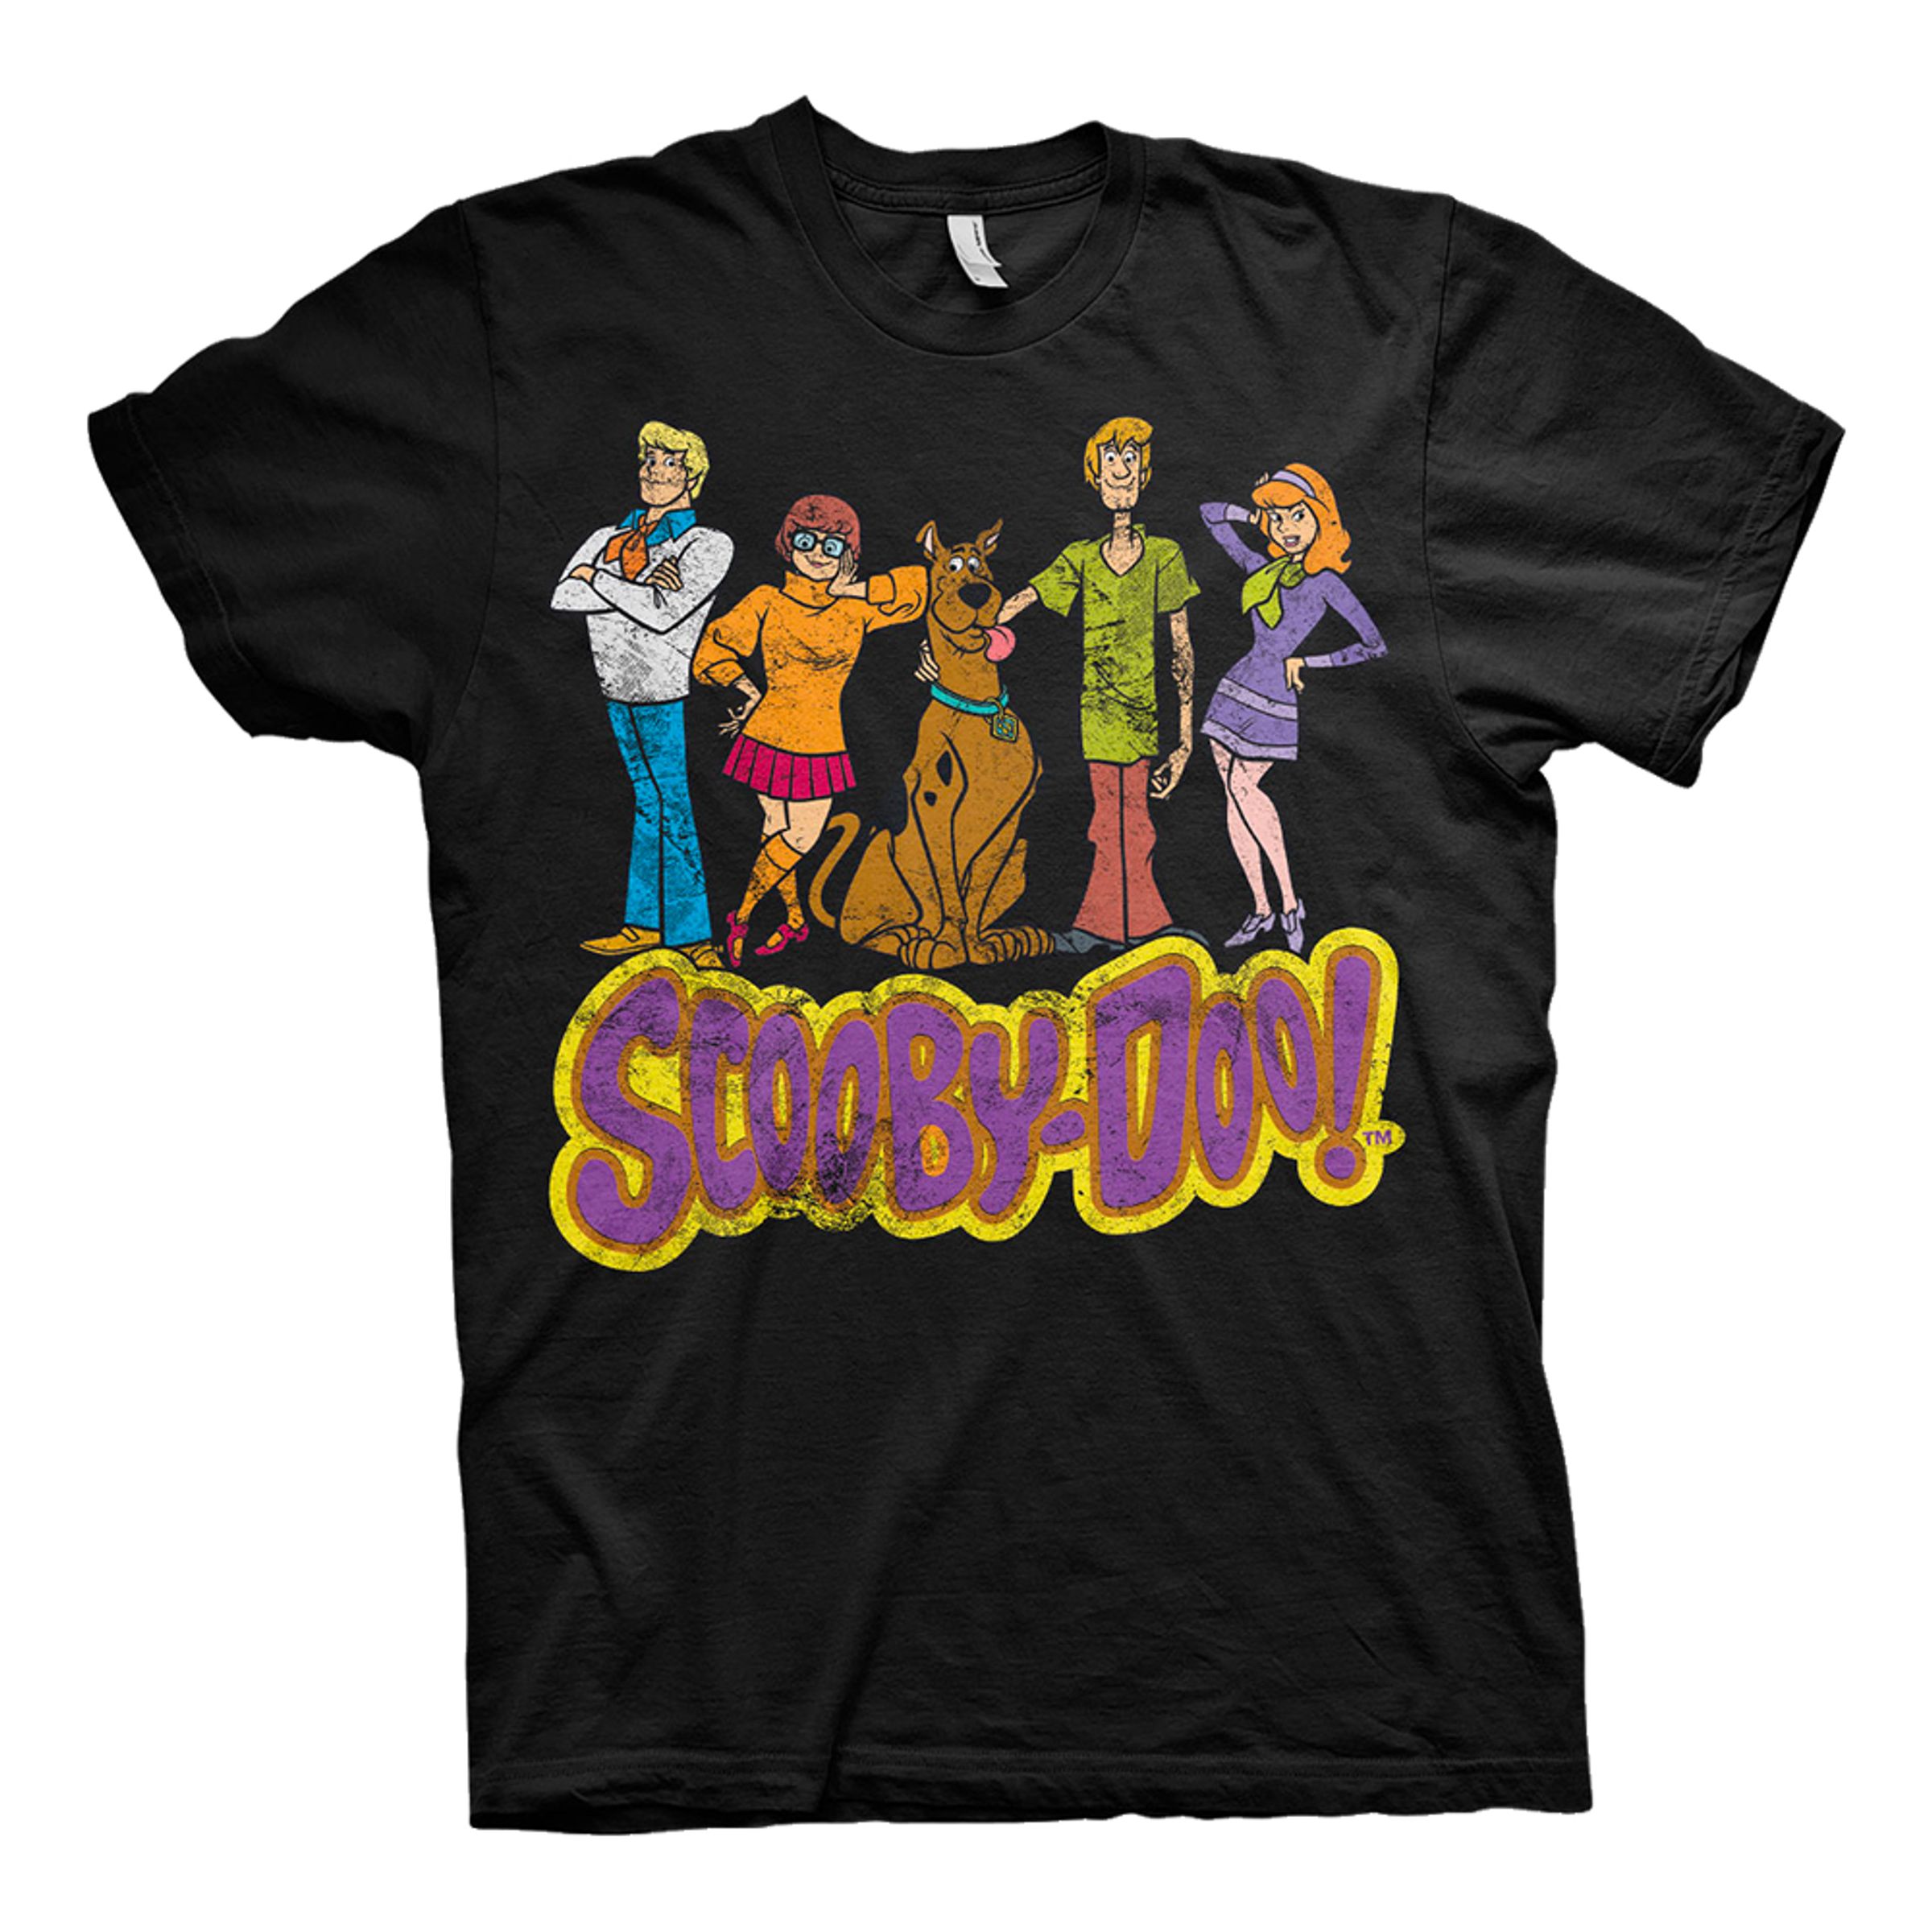 Scooby-Doo T-shirt - Small